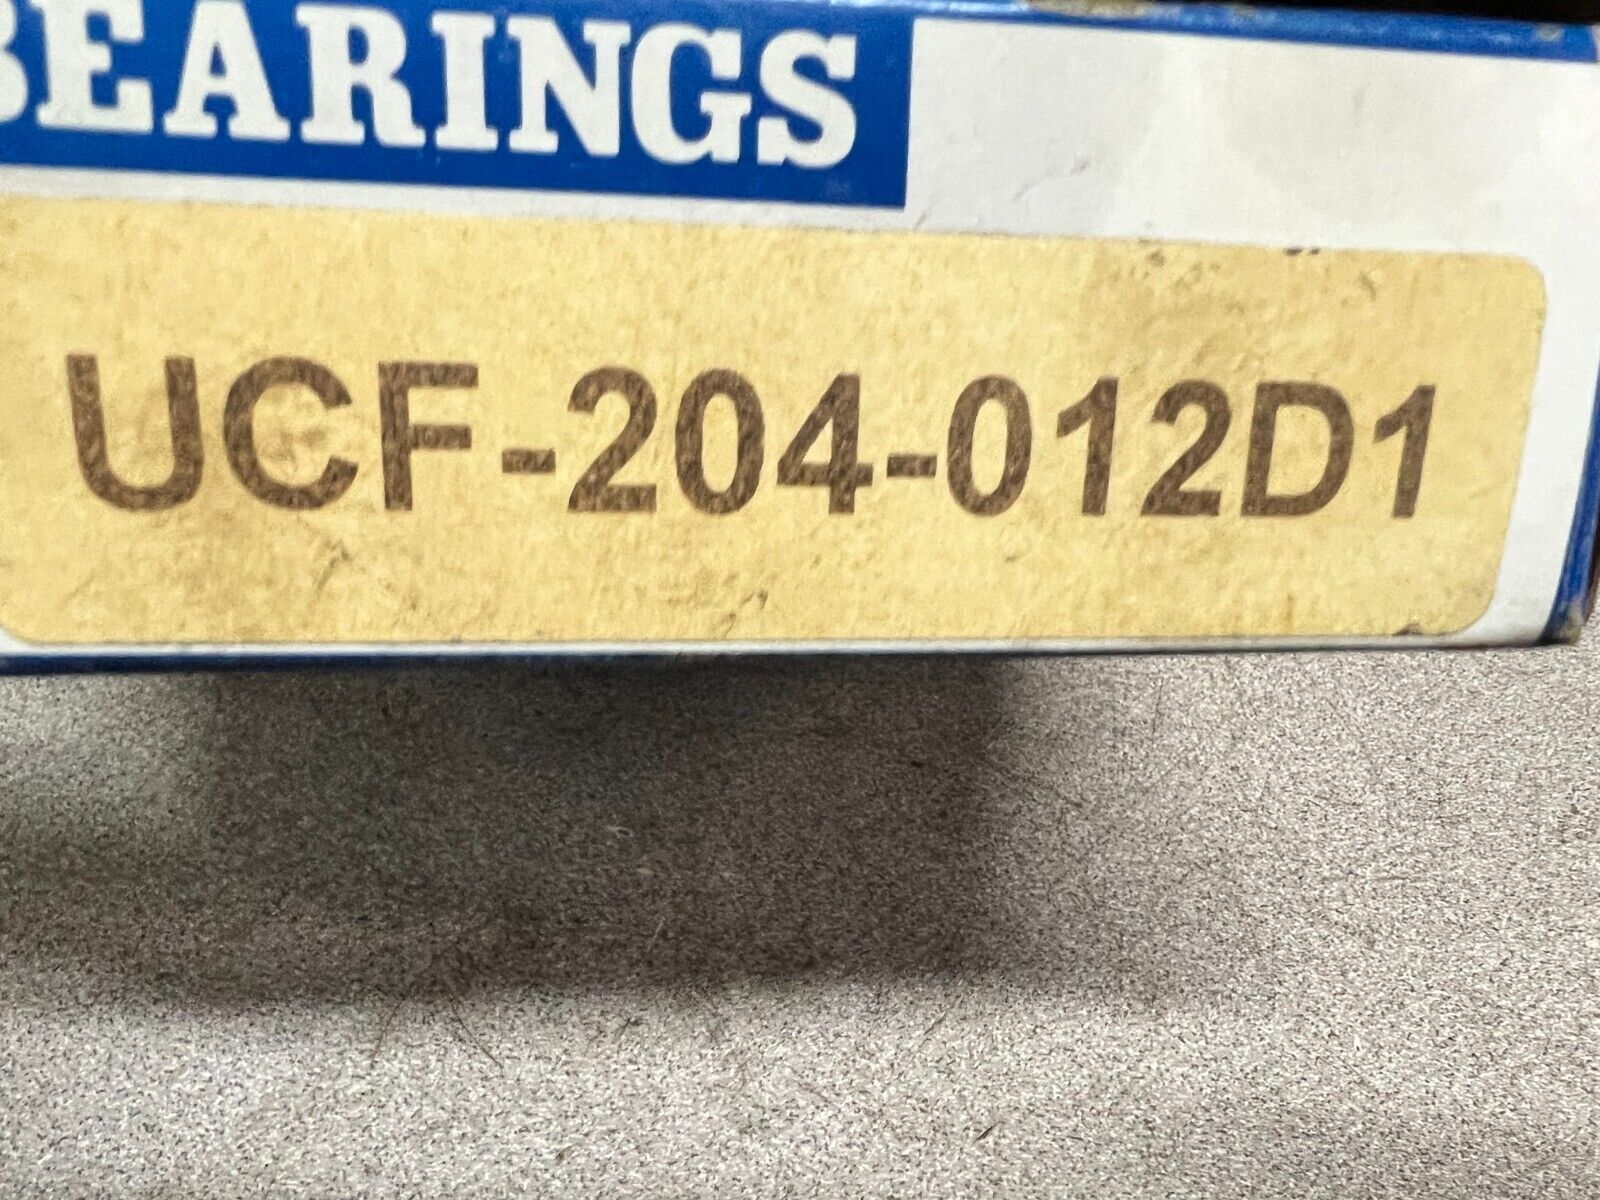 NEW IN BOX IBI FLANGE BEARING UCF-204-012D1